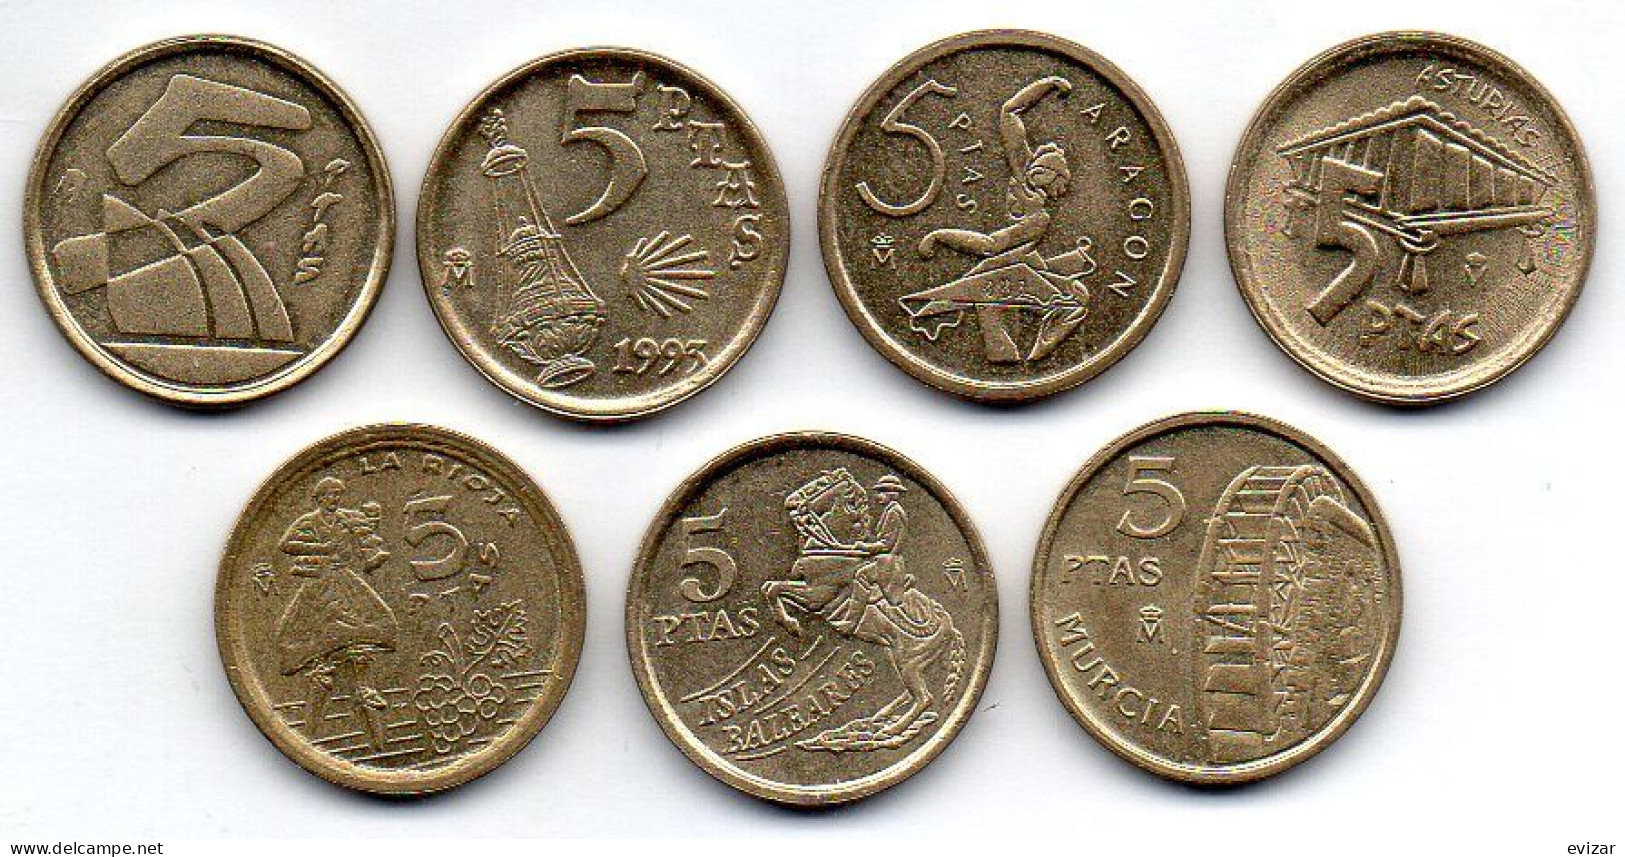 SPAIN, Set Of Seven Coins 5 Pesetas, Nickel-Brass, Alum-Bronze, Year 1991-99, KM # 833, 919, 931, 946, 960, 981, 1008 - 5 Pesetas